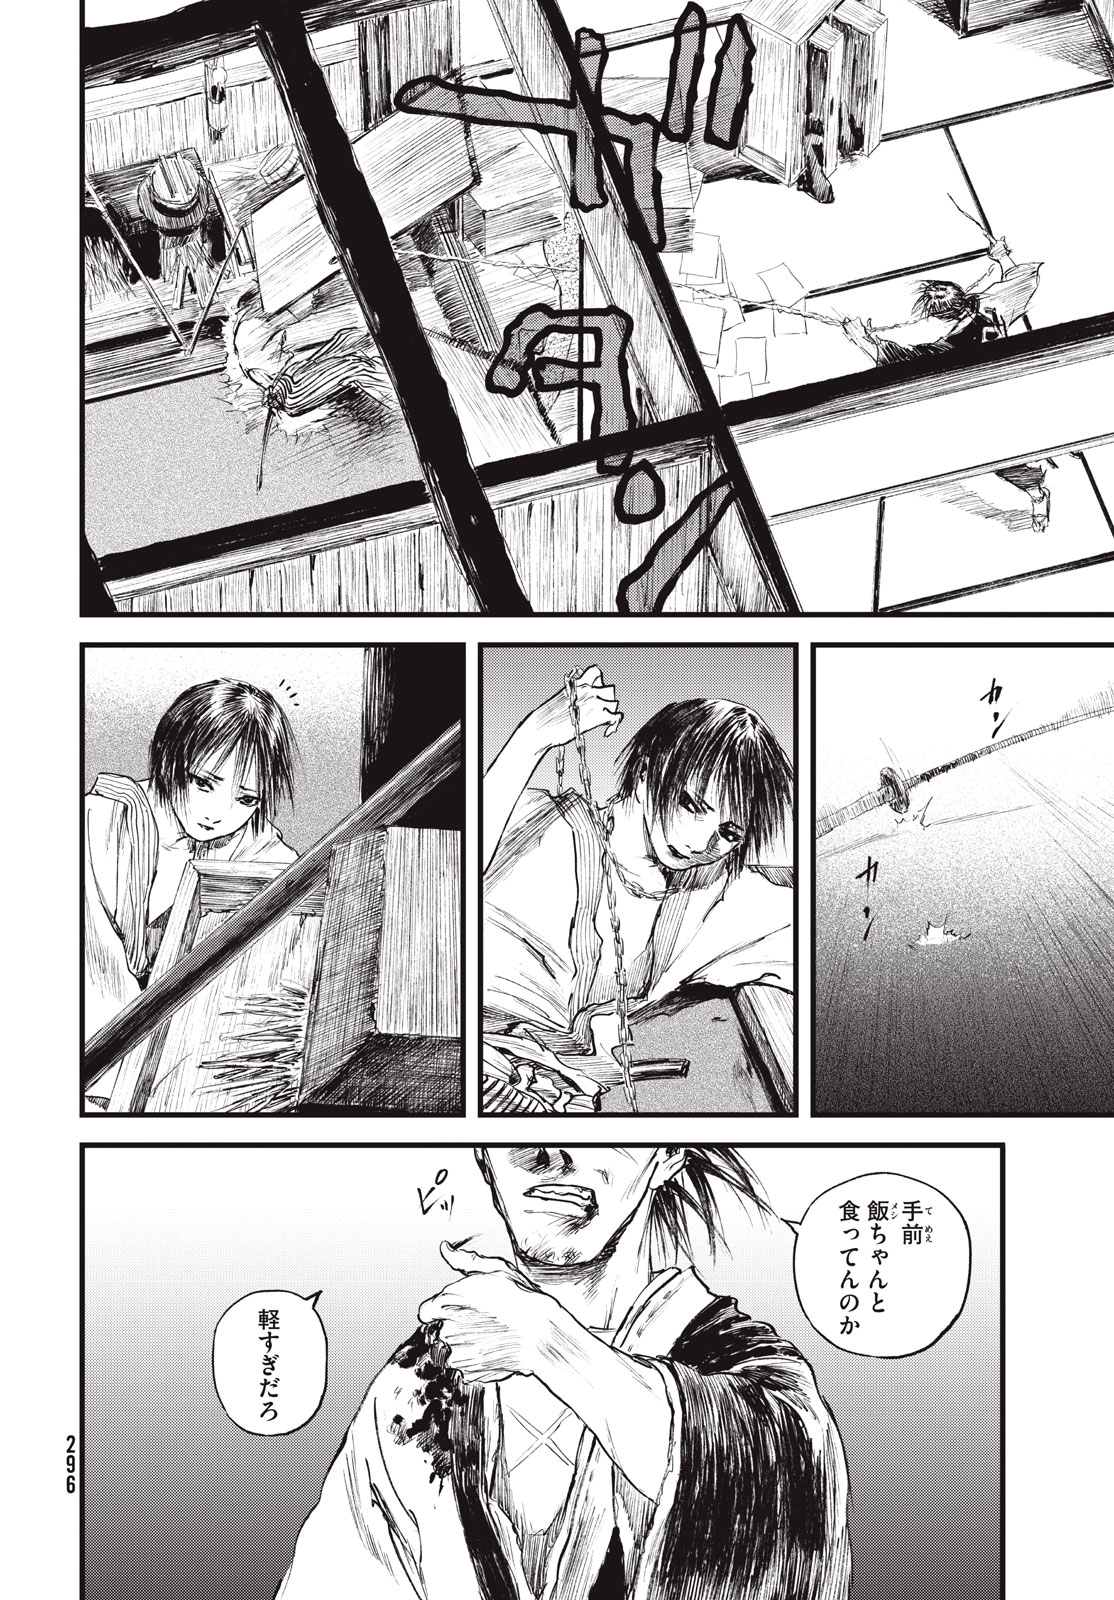 Blade of the Immortal: Bakumatsu Arc - Chapter 57 - Page 24